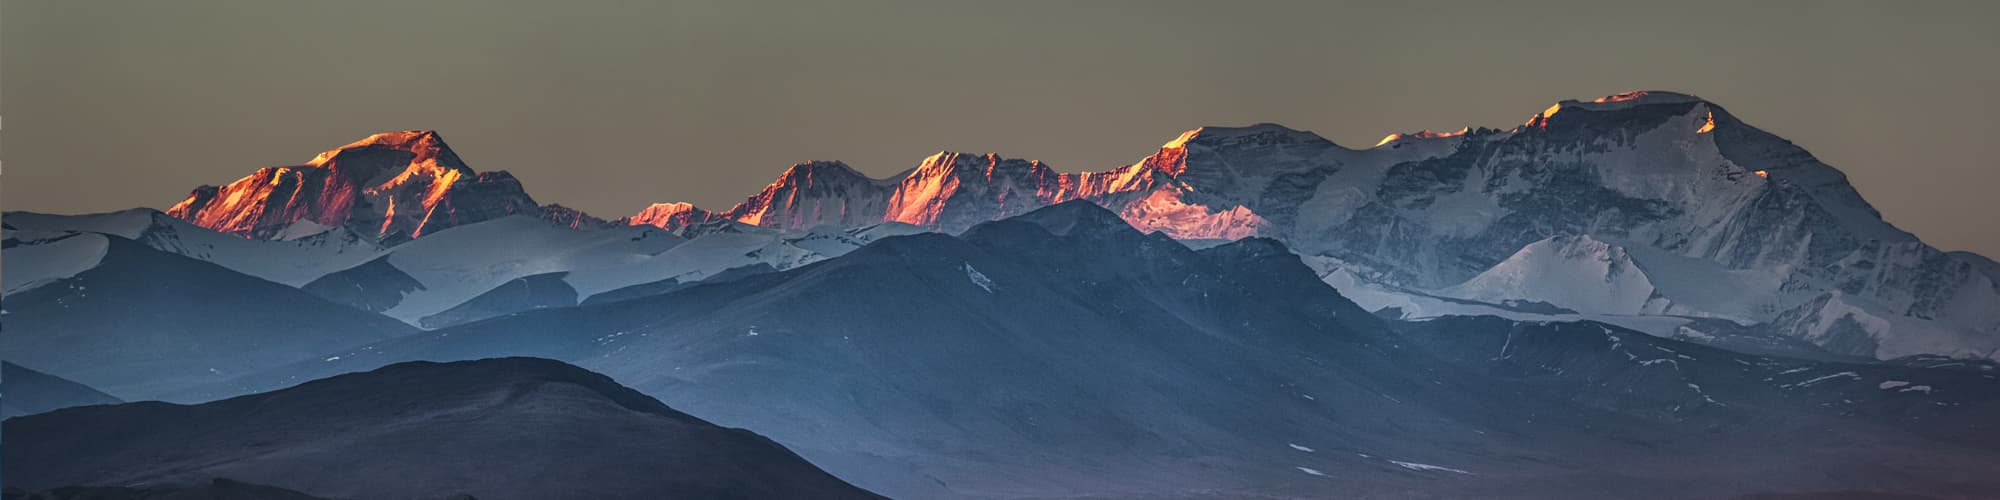 Trekking au Tibet : circuit, randonnée et voyage © Kiwisoul / Istock